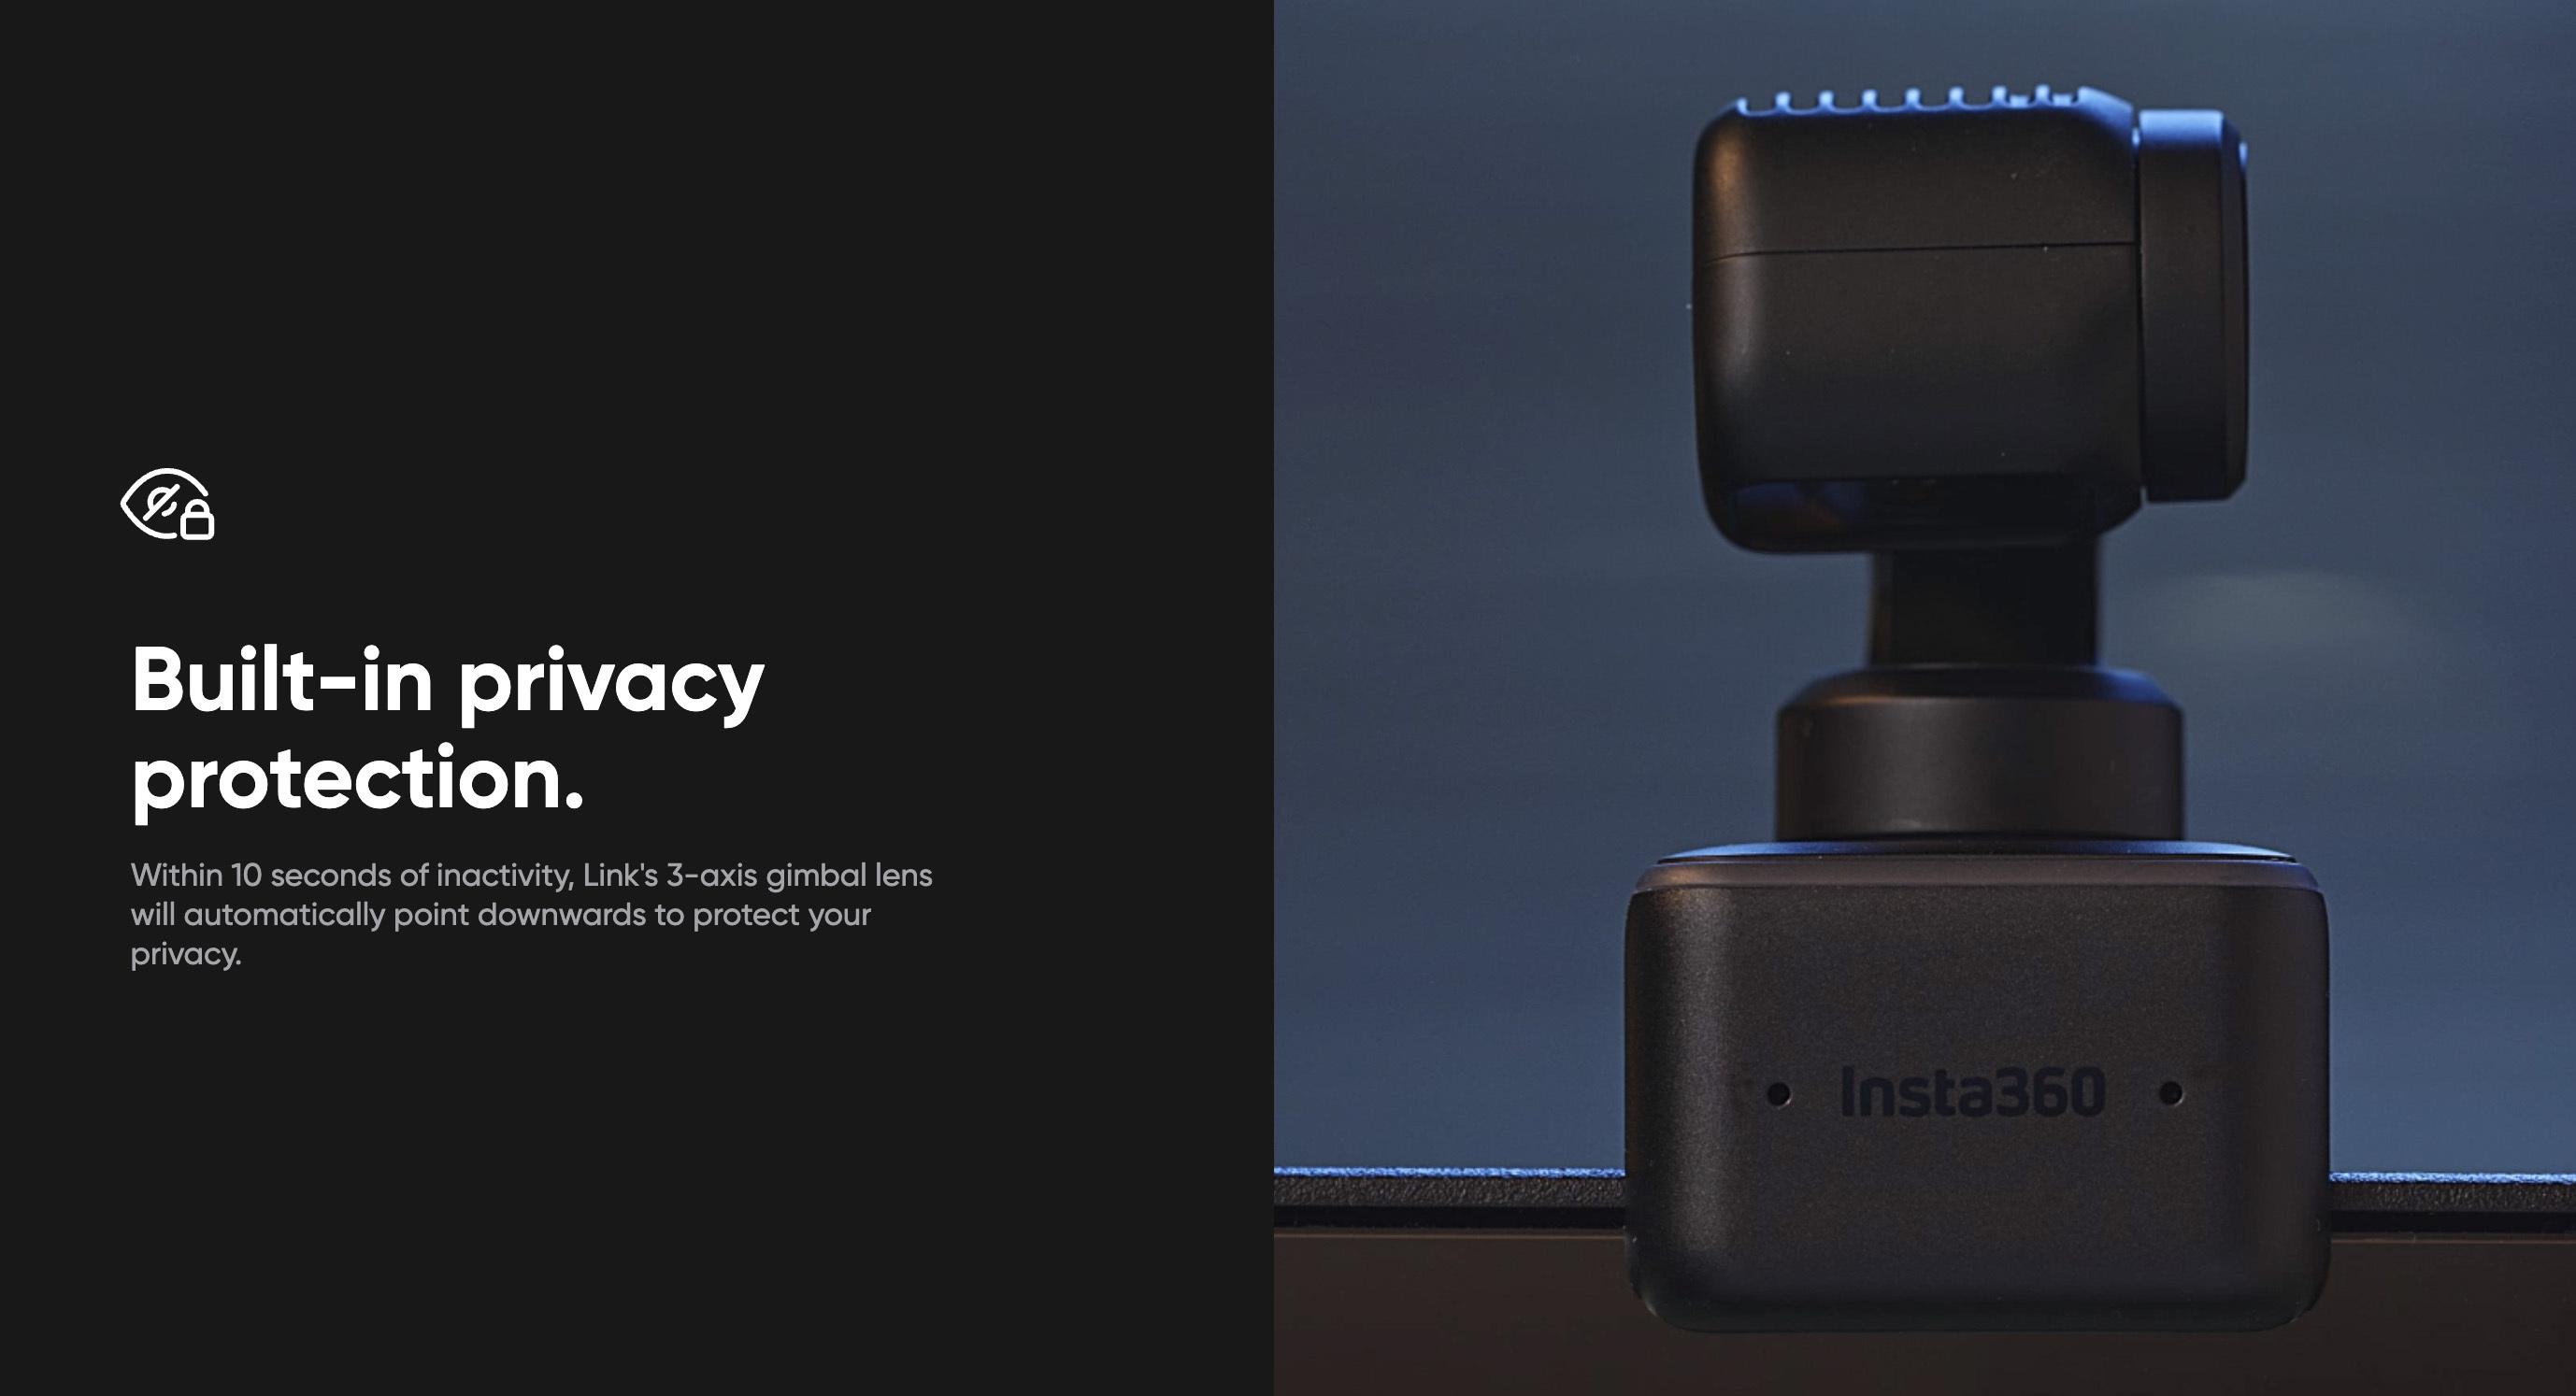 Insta360 Link privacy